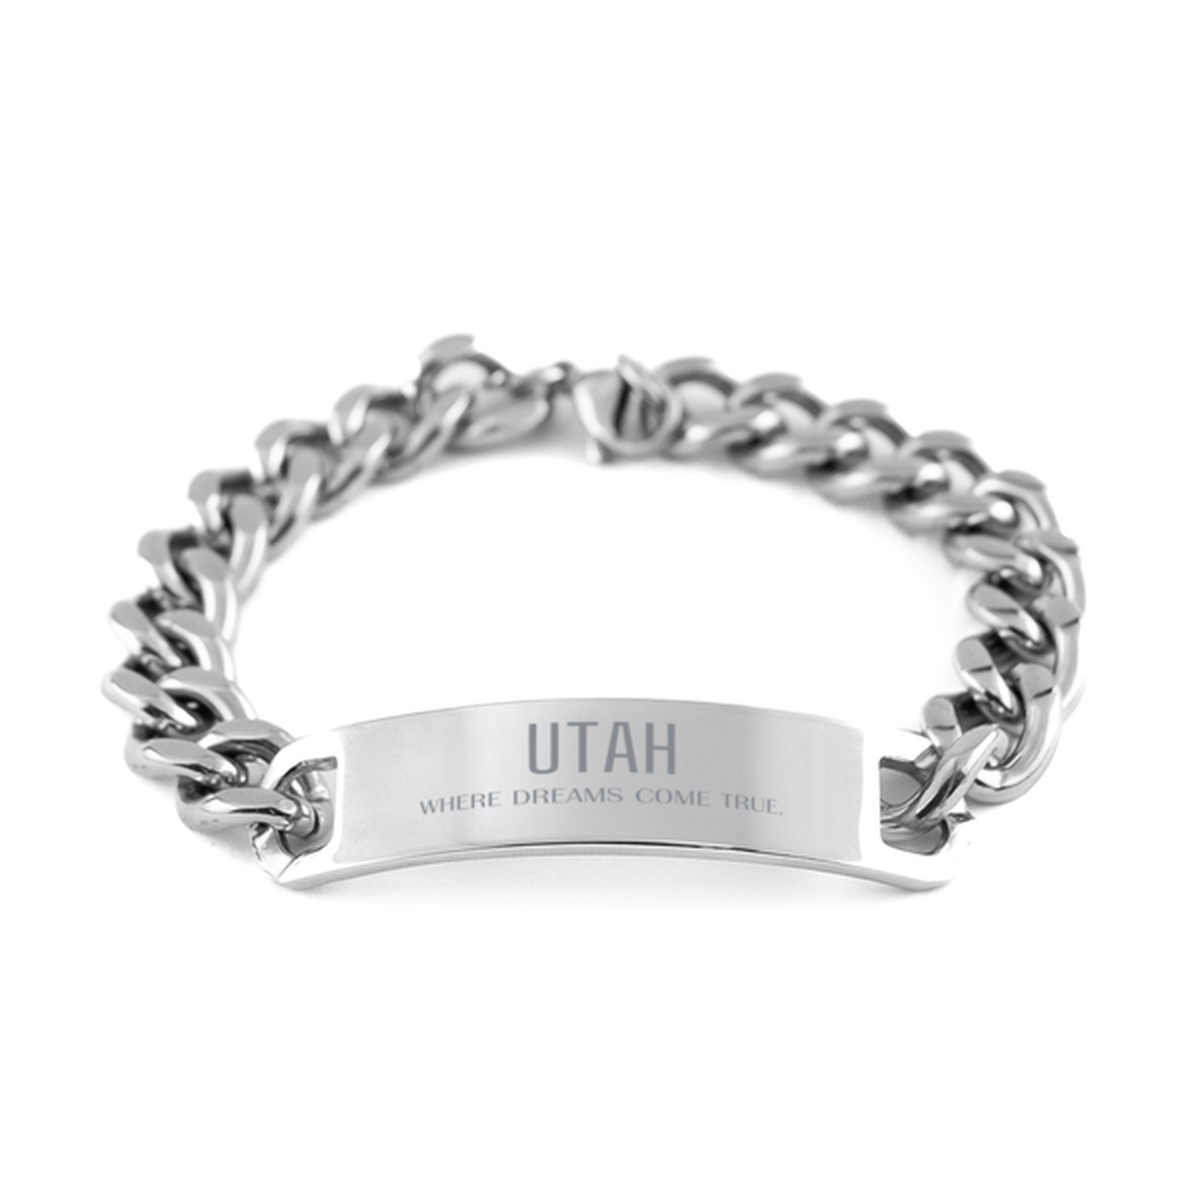 Love Utah State Cuban Chain Stainless Steel Bracelet, Utah Where dreams come true, Birthday Inspirational Gifts For Utah Men, Women, Friends